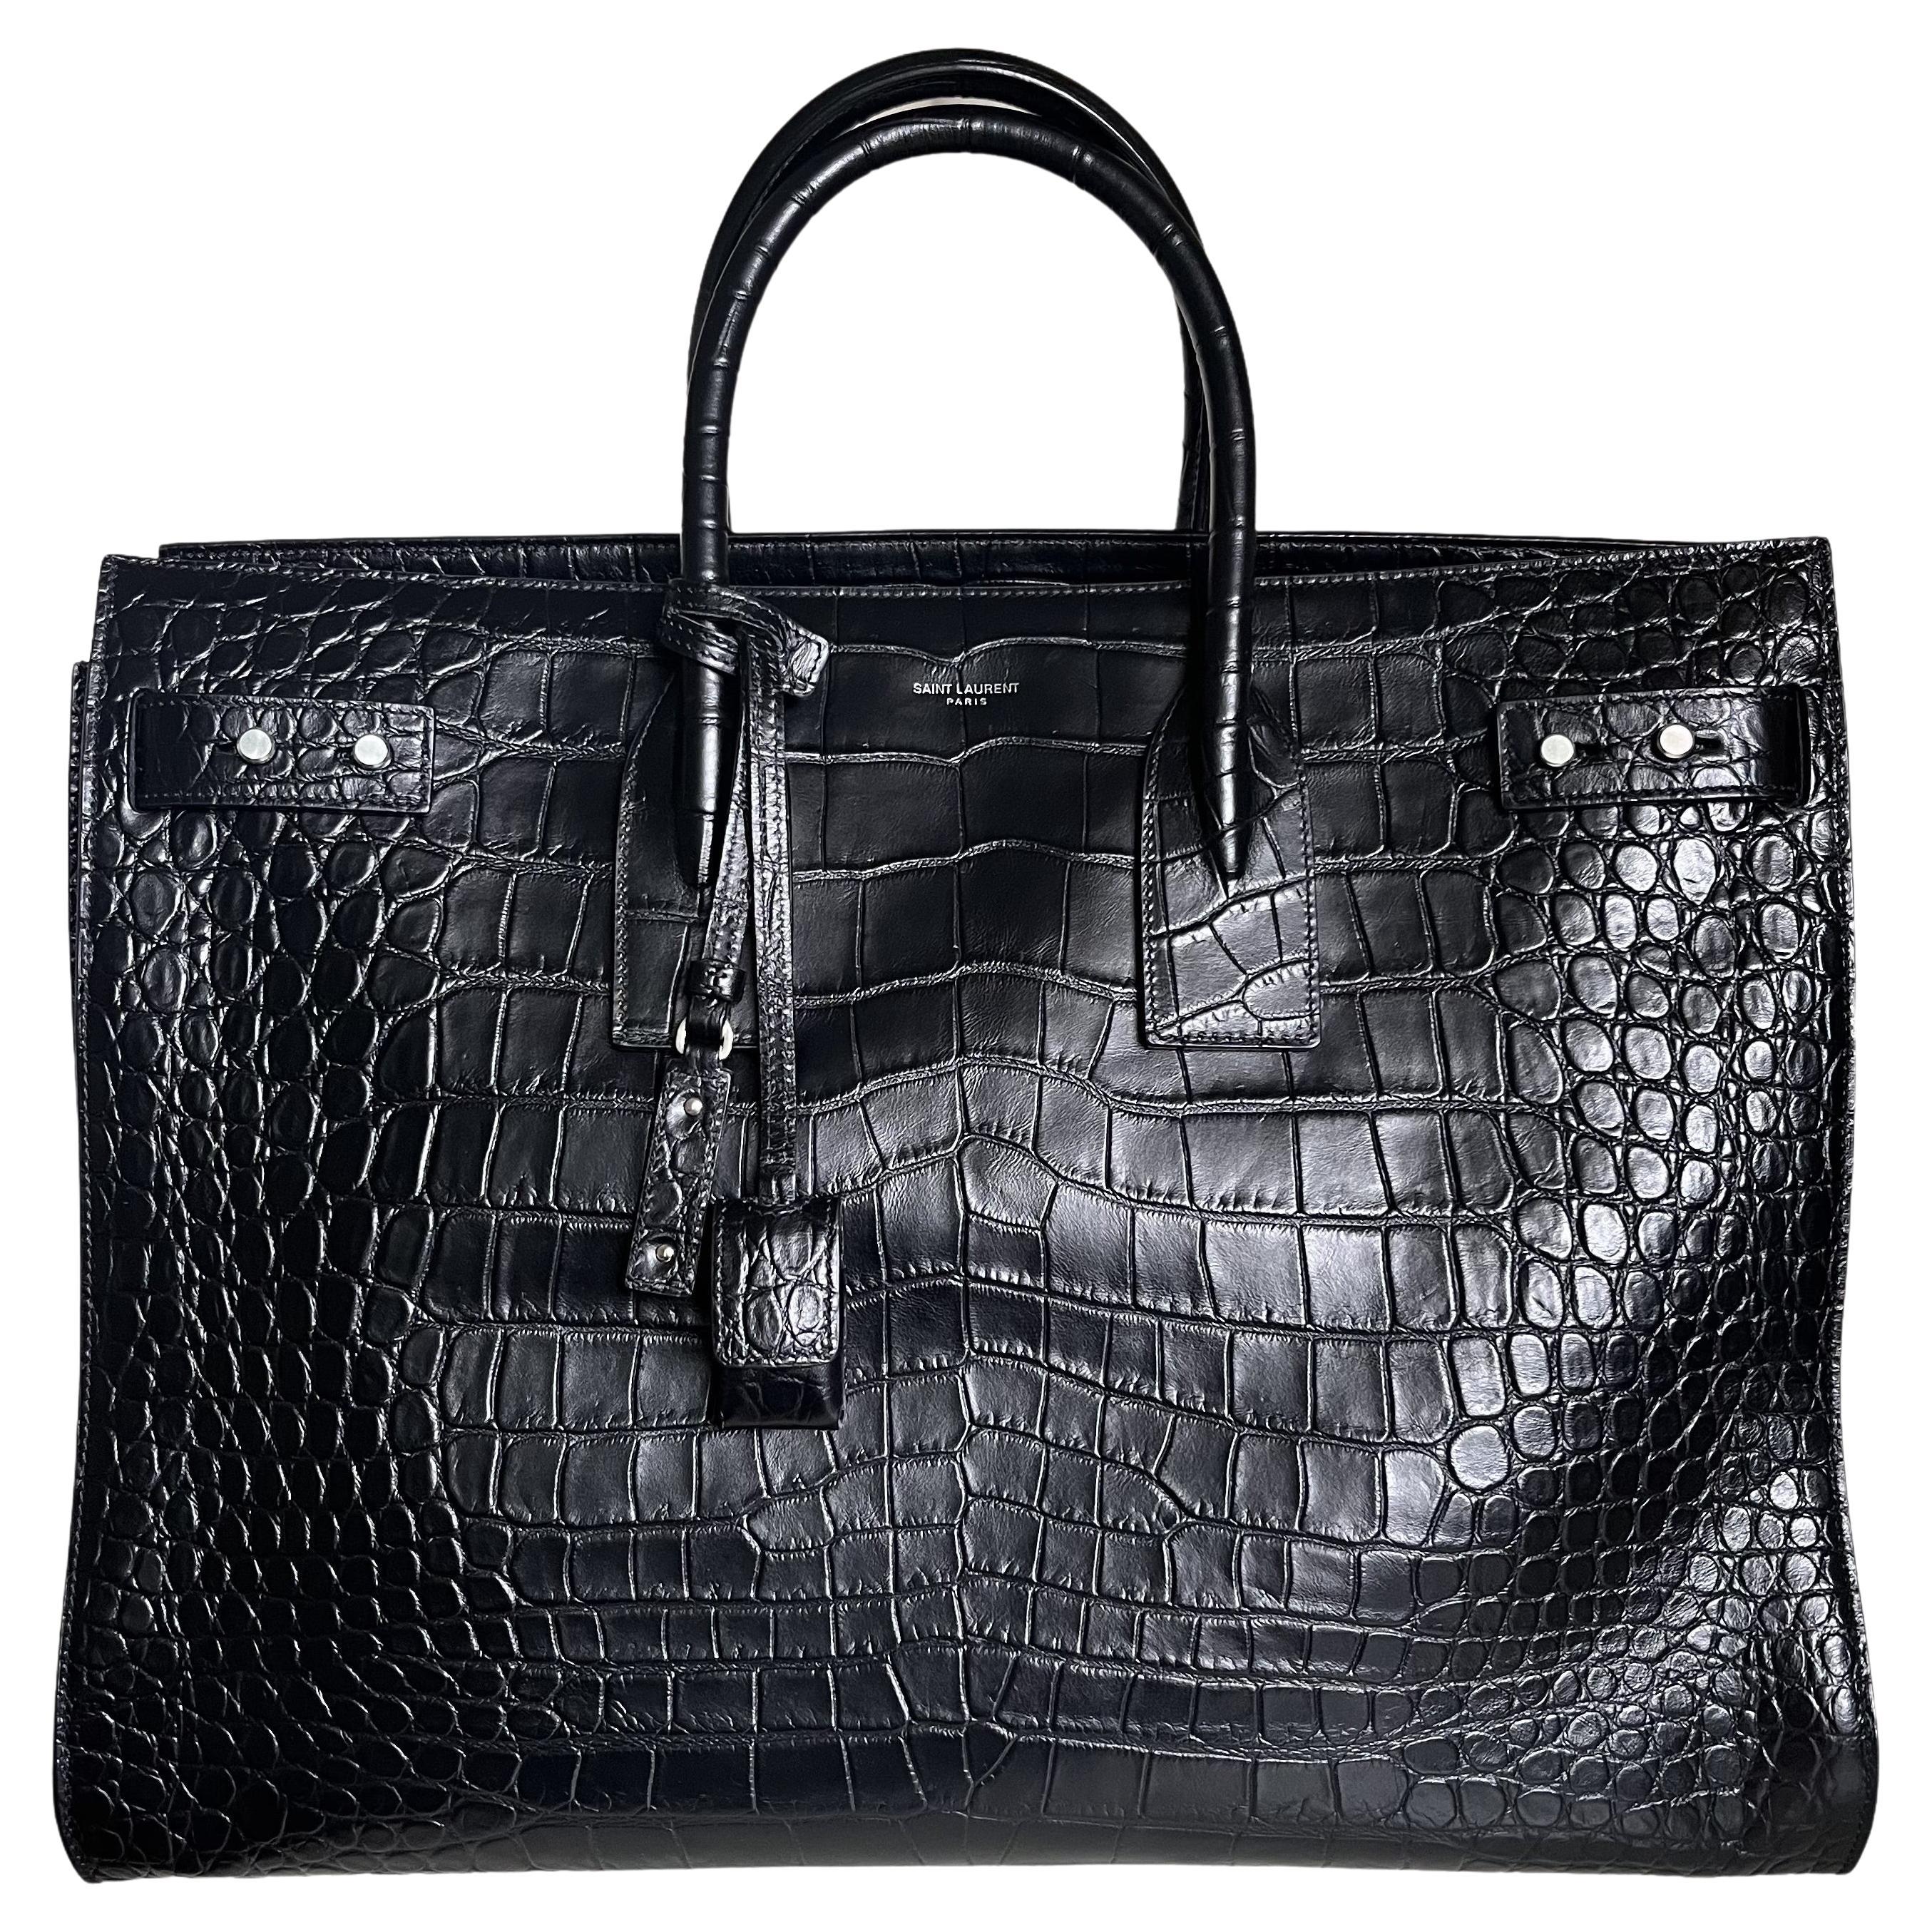 Saint Laurent Sac De Jour Large Black Crocodile-embossed Leather Handbag